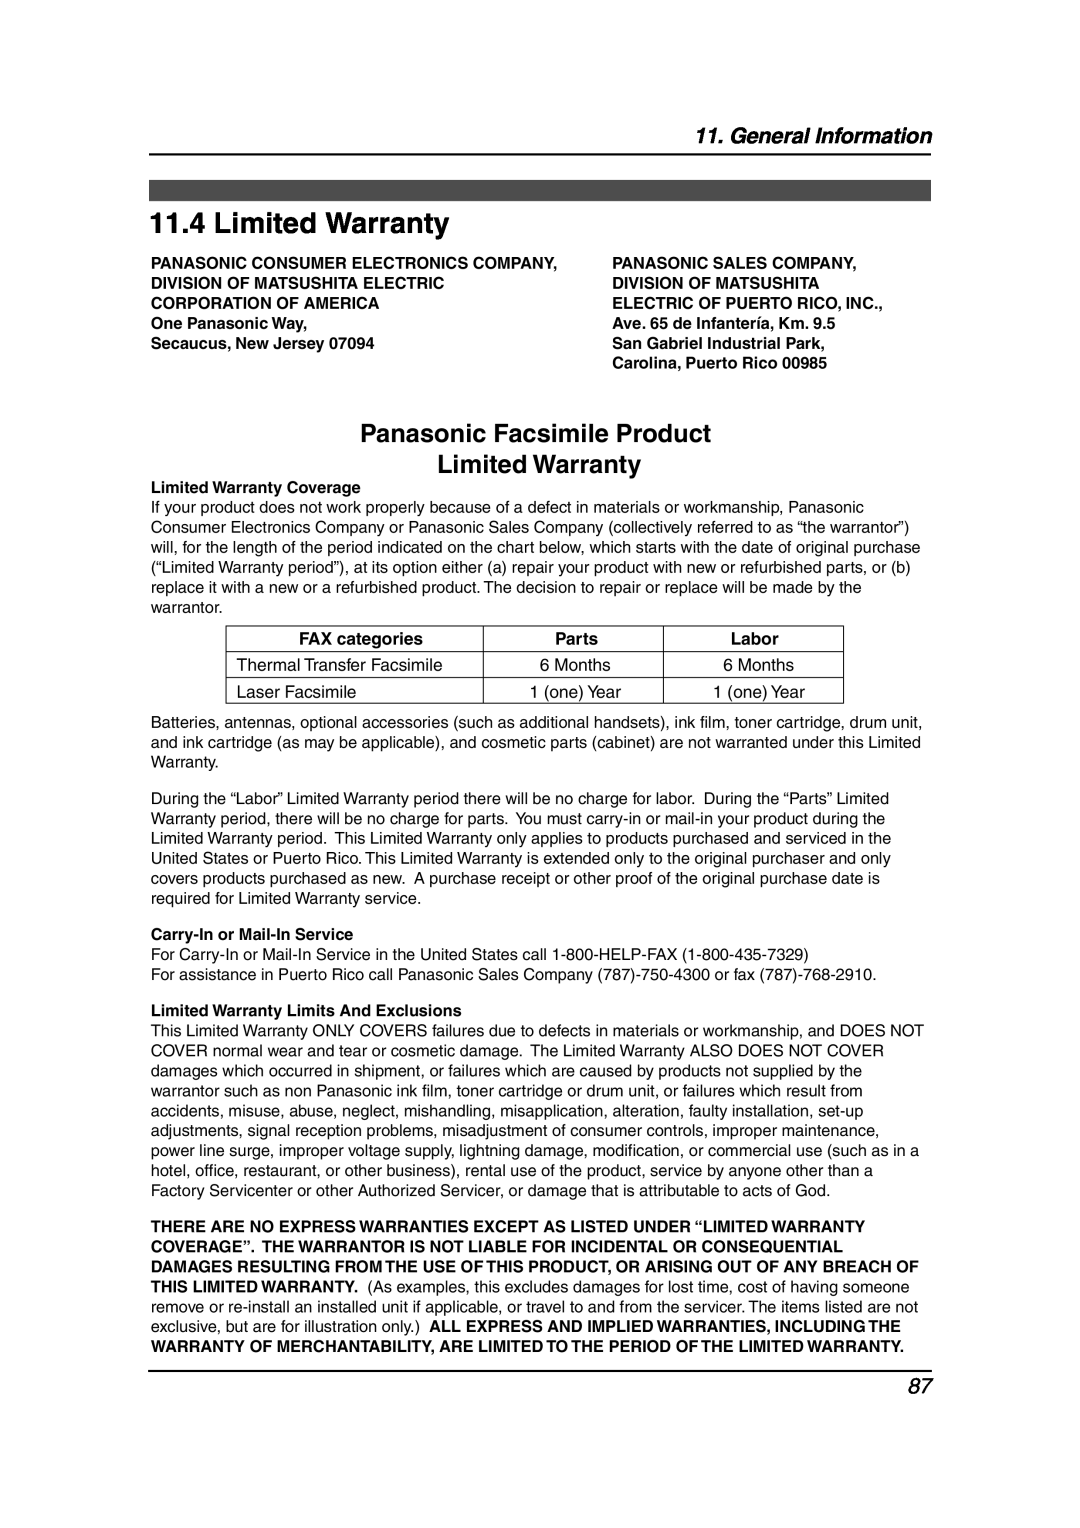 Panasonic KX-FPG377 manual Panasonic Facsimile Product Limited Warranty, General Information, Panasonic Sales Company 